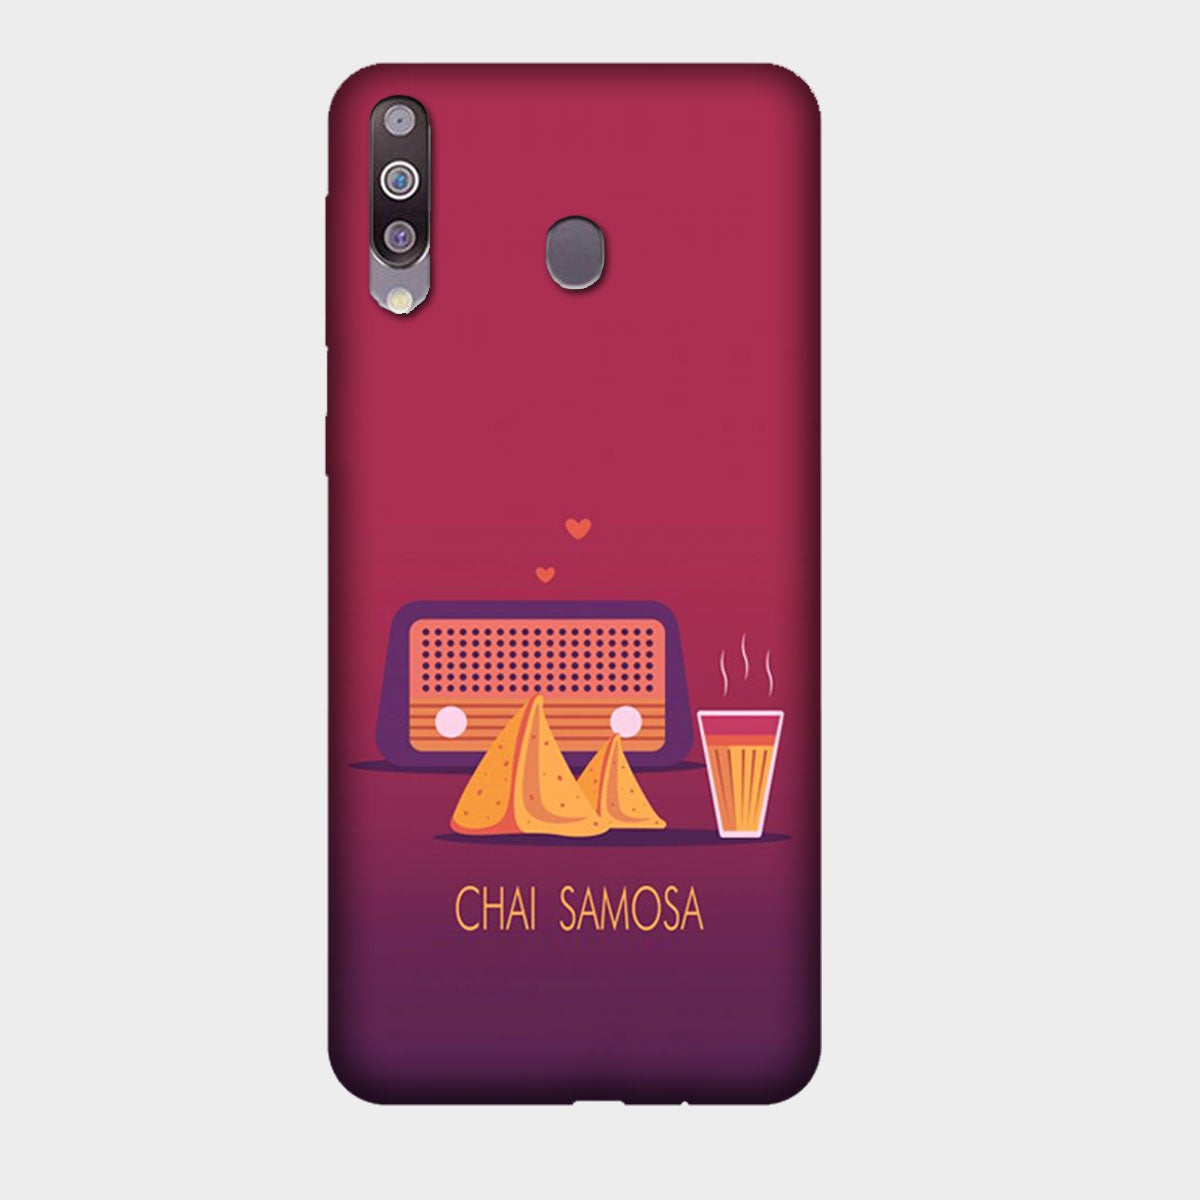 Chai Samosa - Mobile Phone Cover - Hard Case - Samsung - Samsung